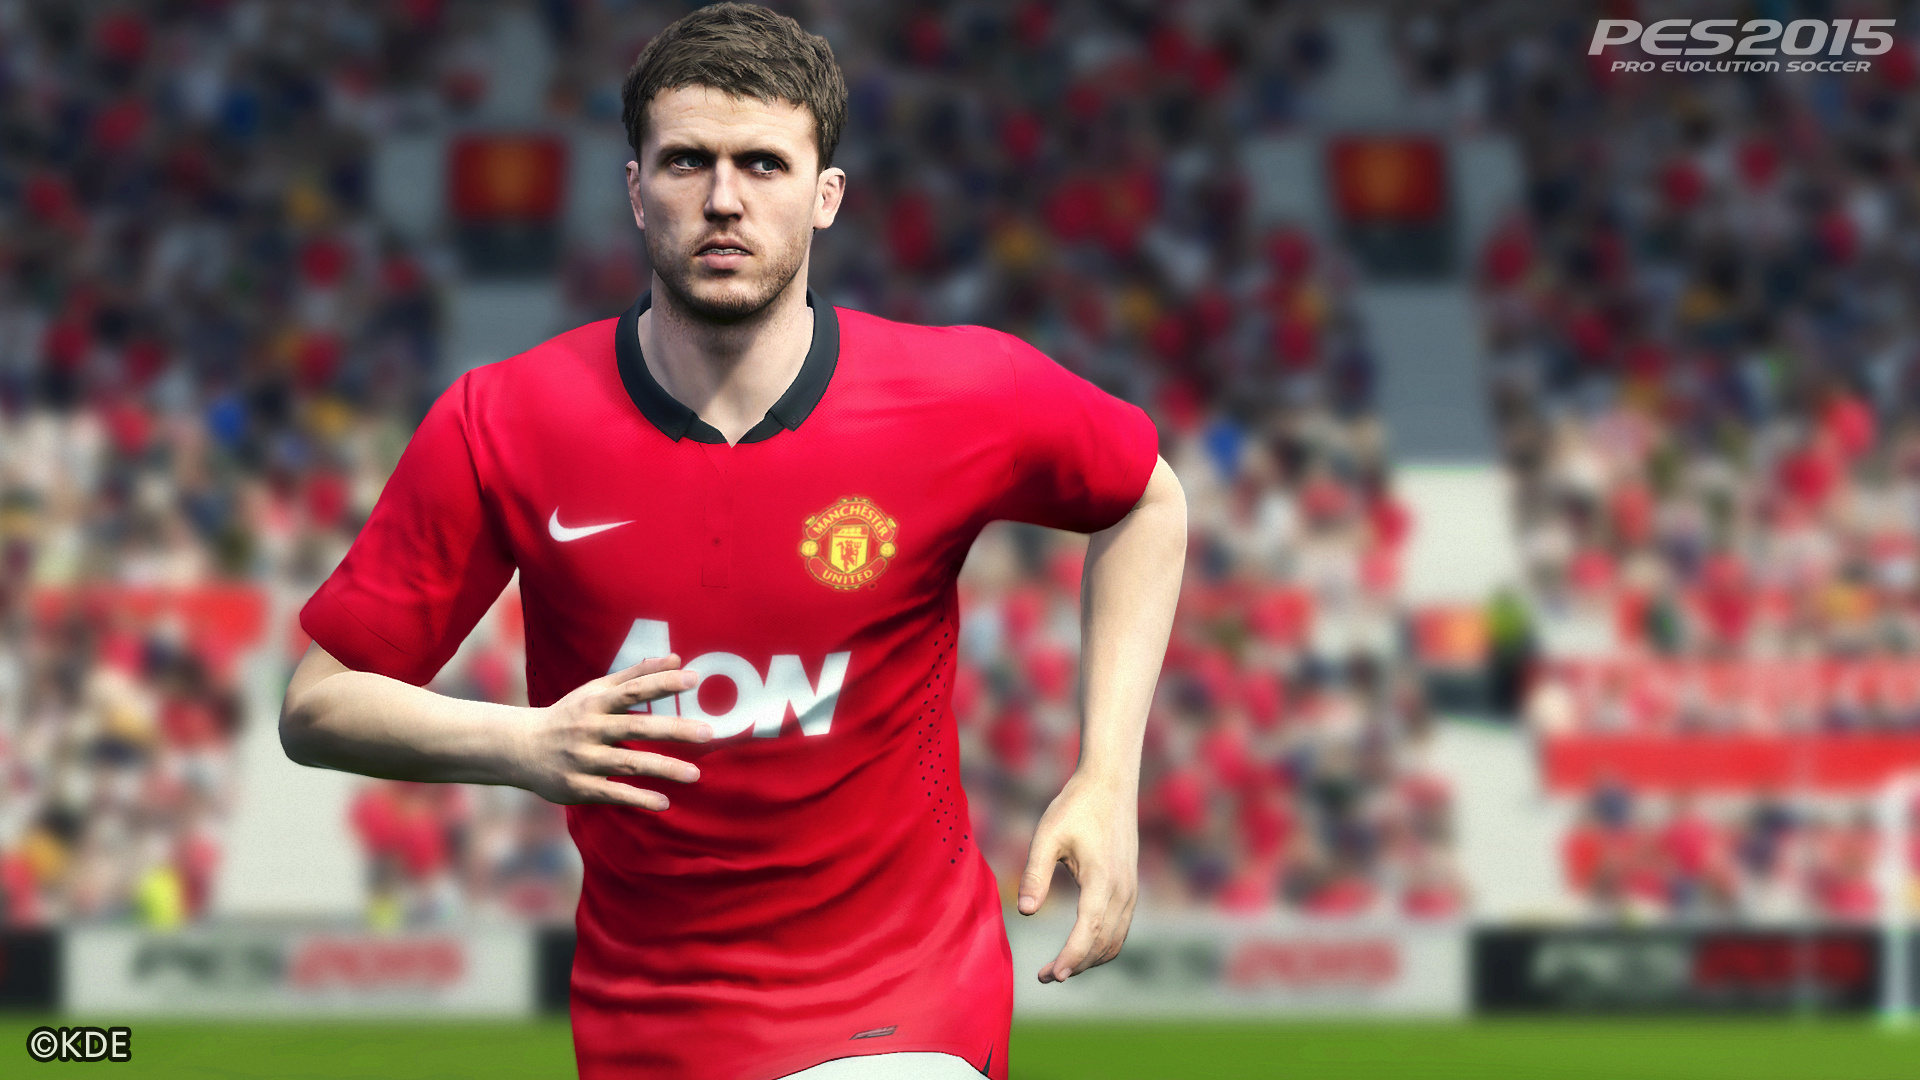 PES 2015: Pro Evolution Soccer (PS3 / PlayStation 3) Game Profile